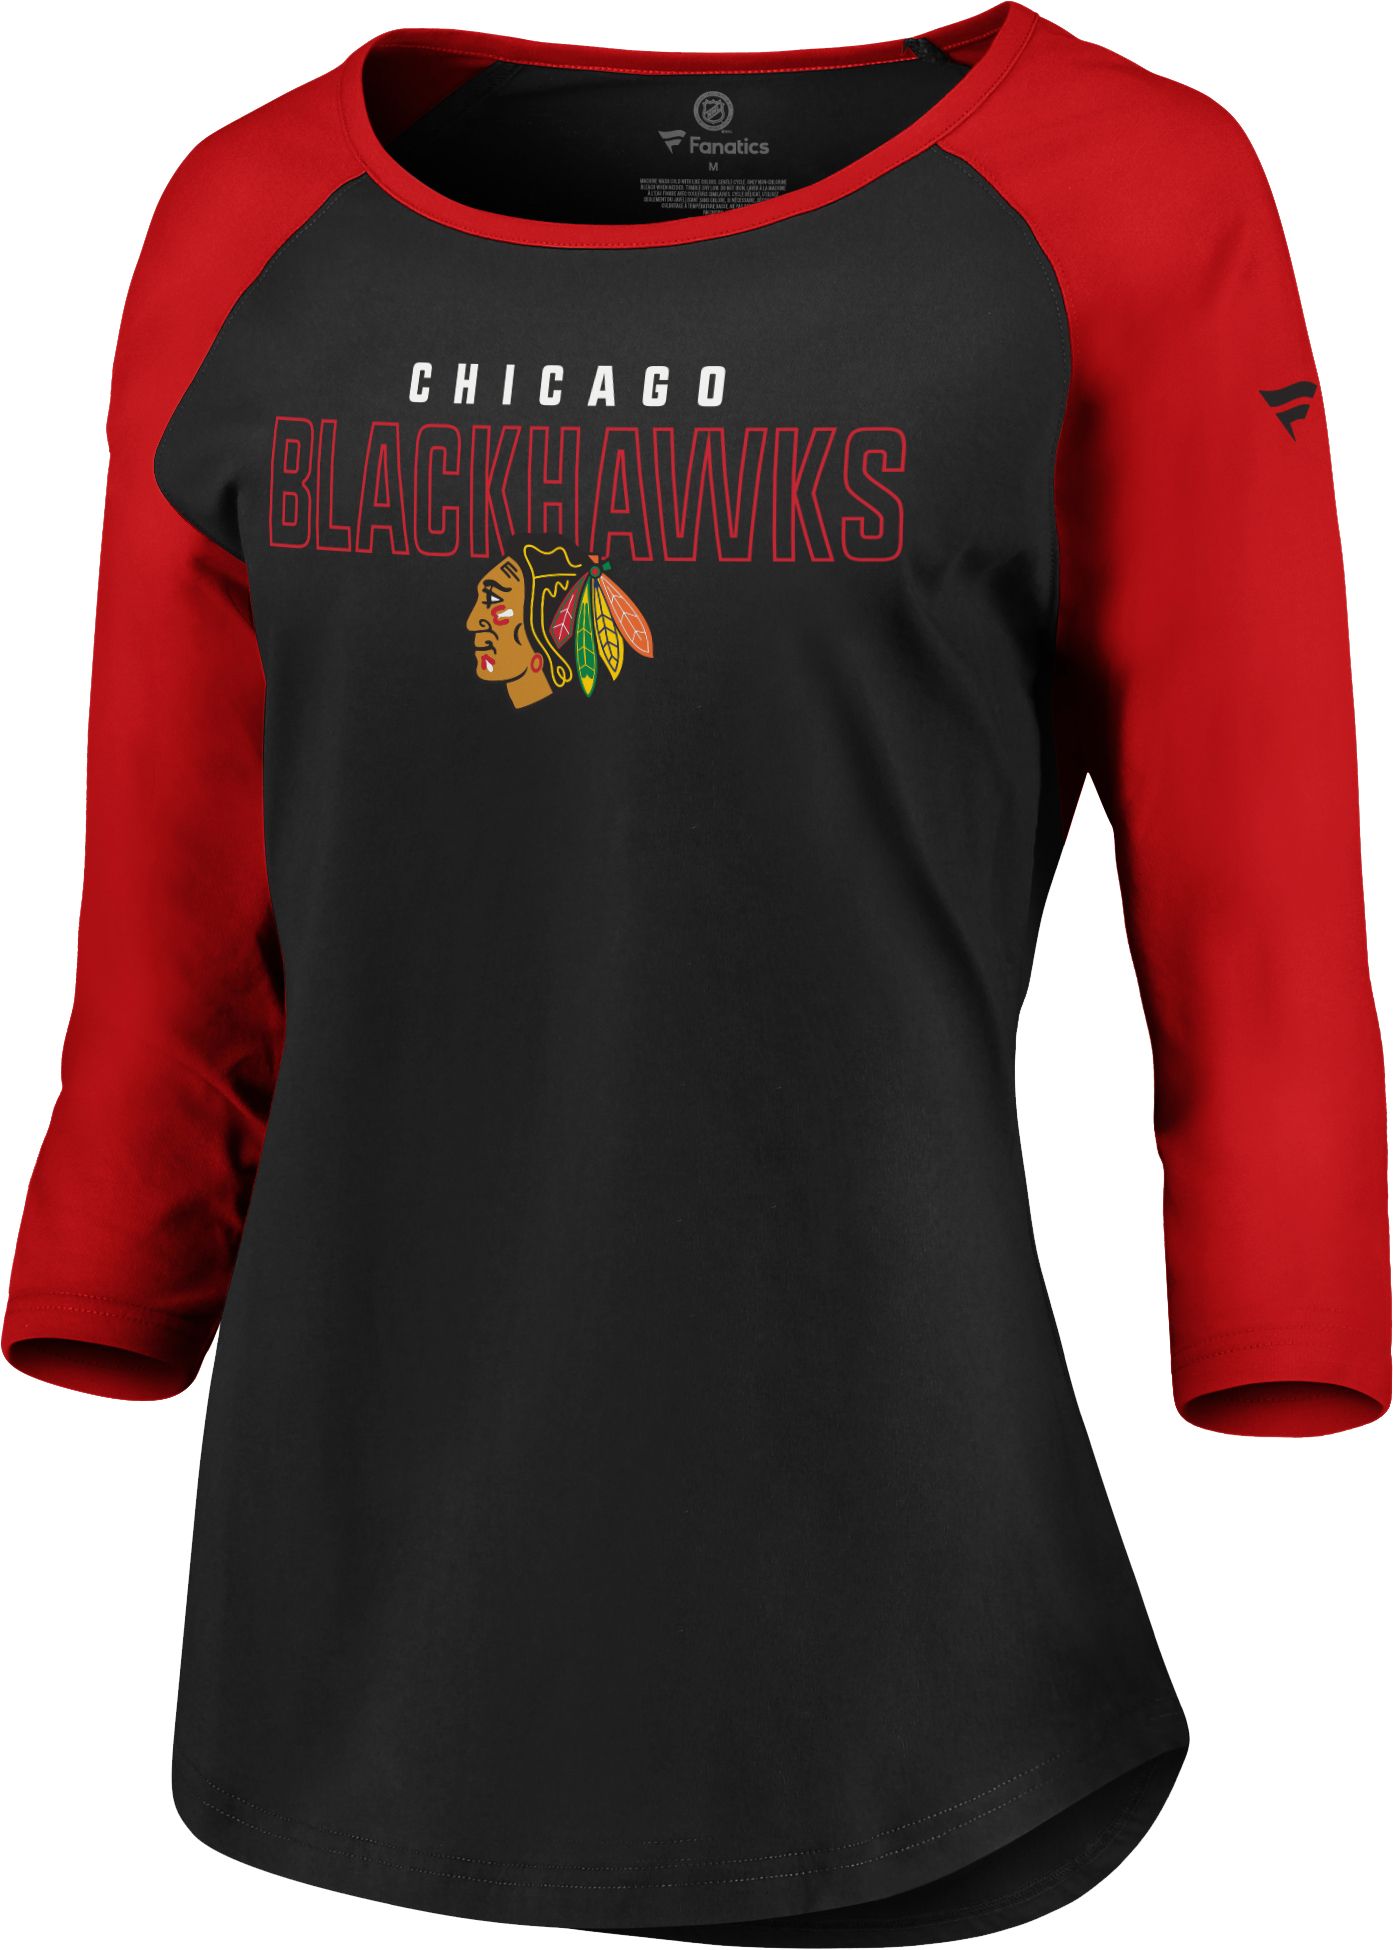 Chicago Blackhawks Apparel & Gear | NHL Fan Shop at DICK'S